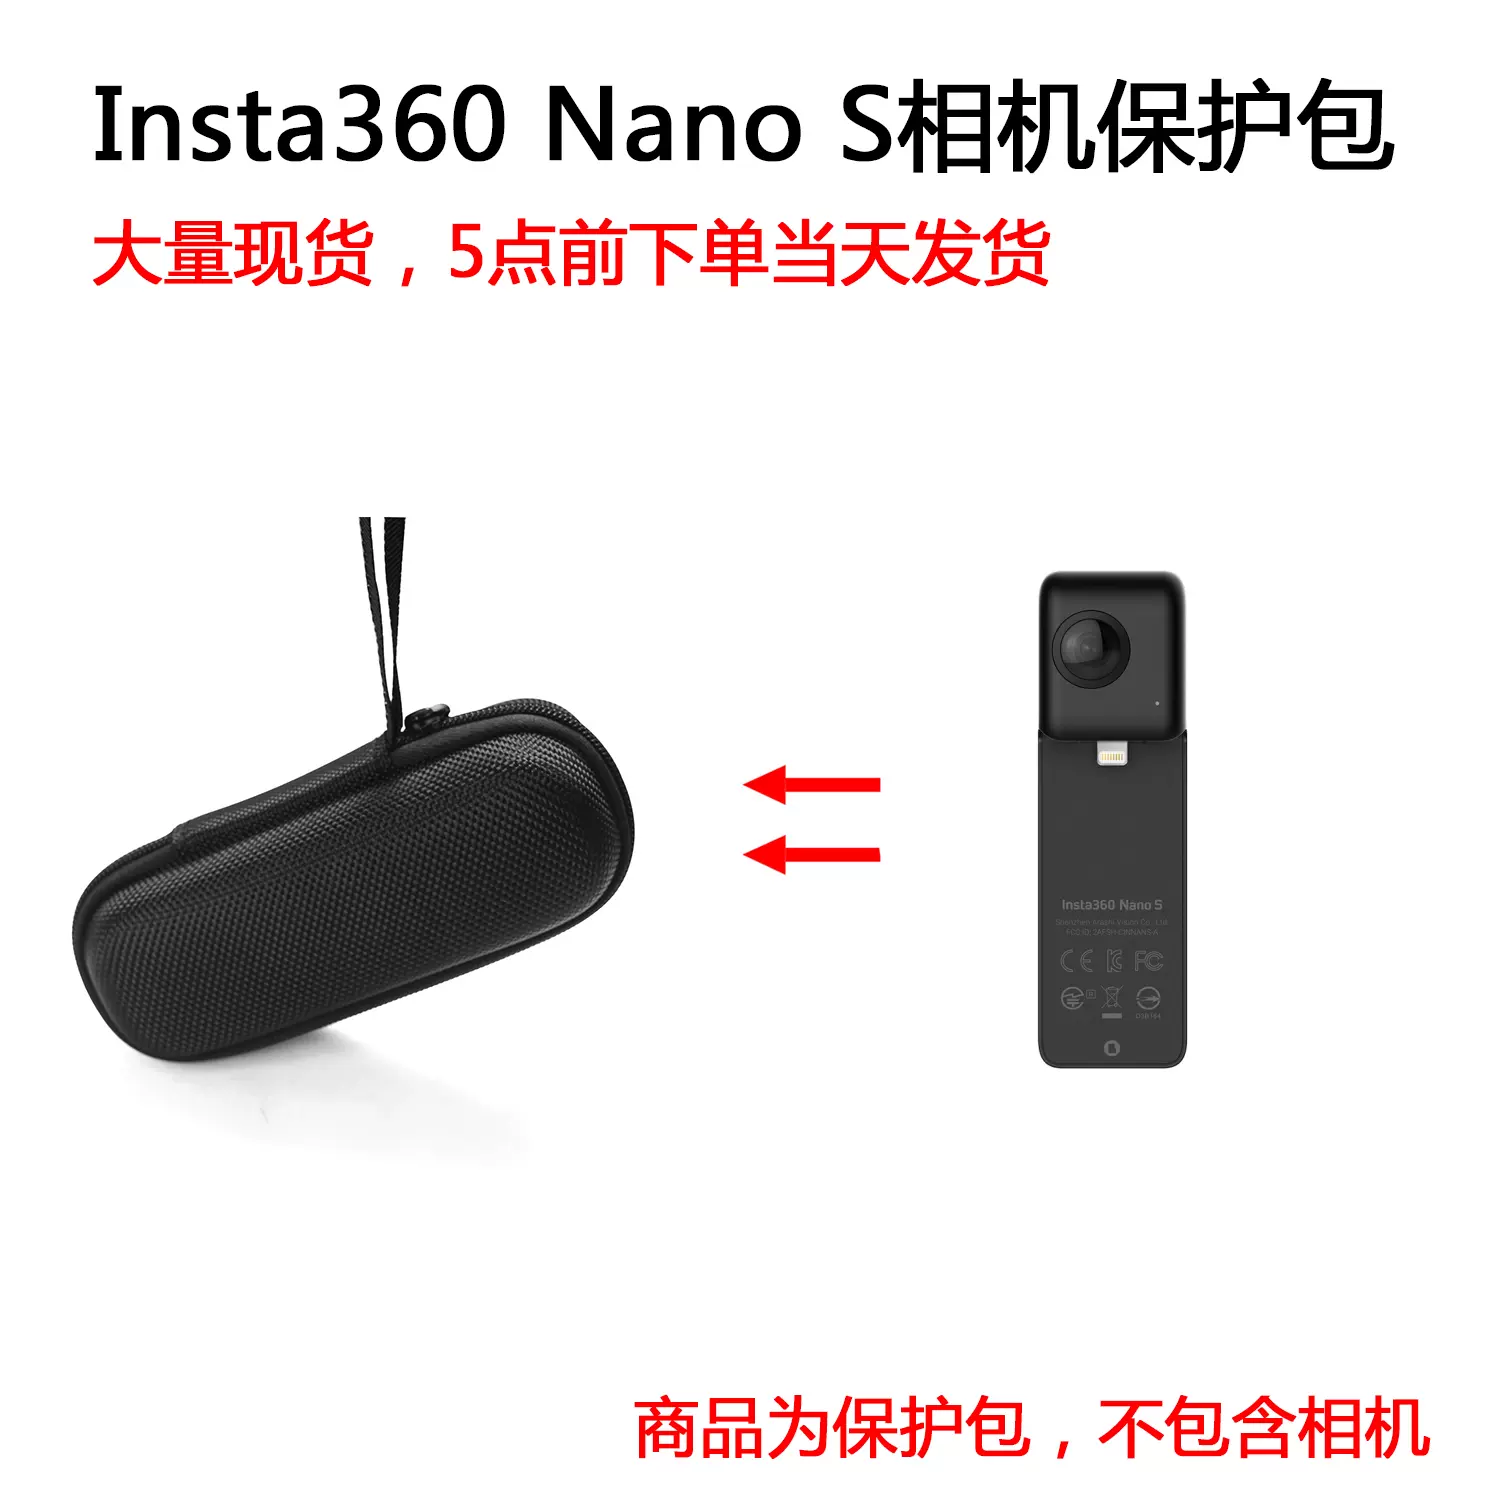 Insta360 Nano NanoS全景运动相机保护包户外便携袋保护套包邮-Taobao